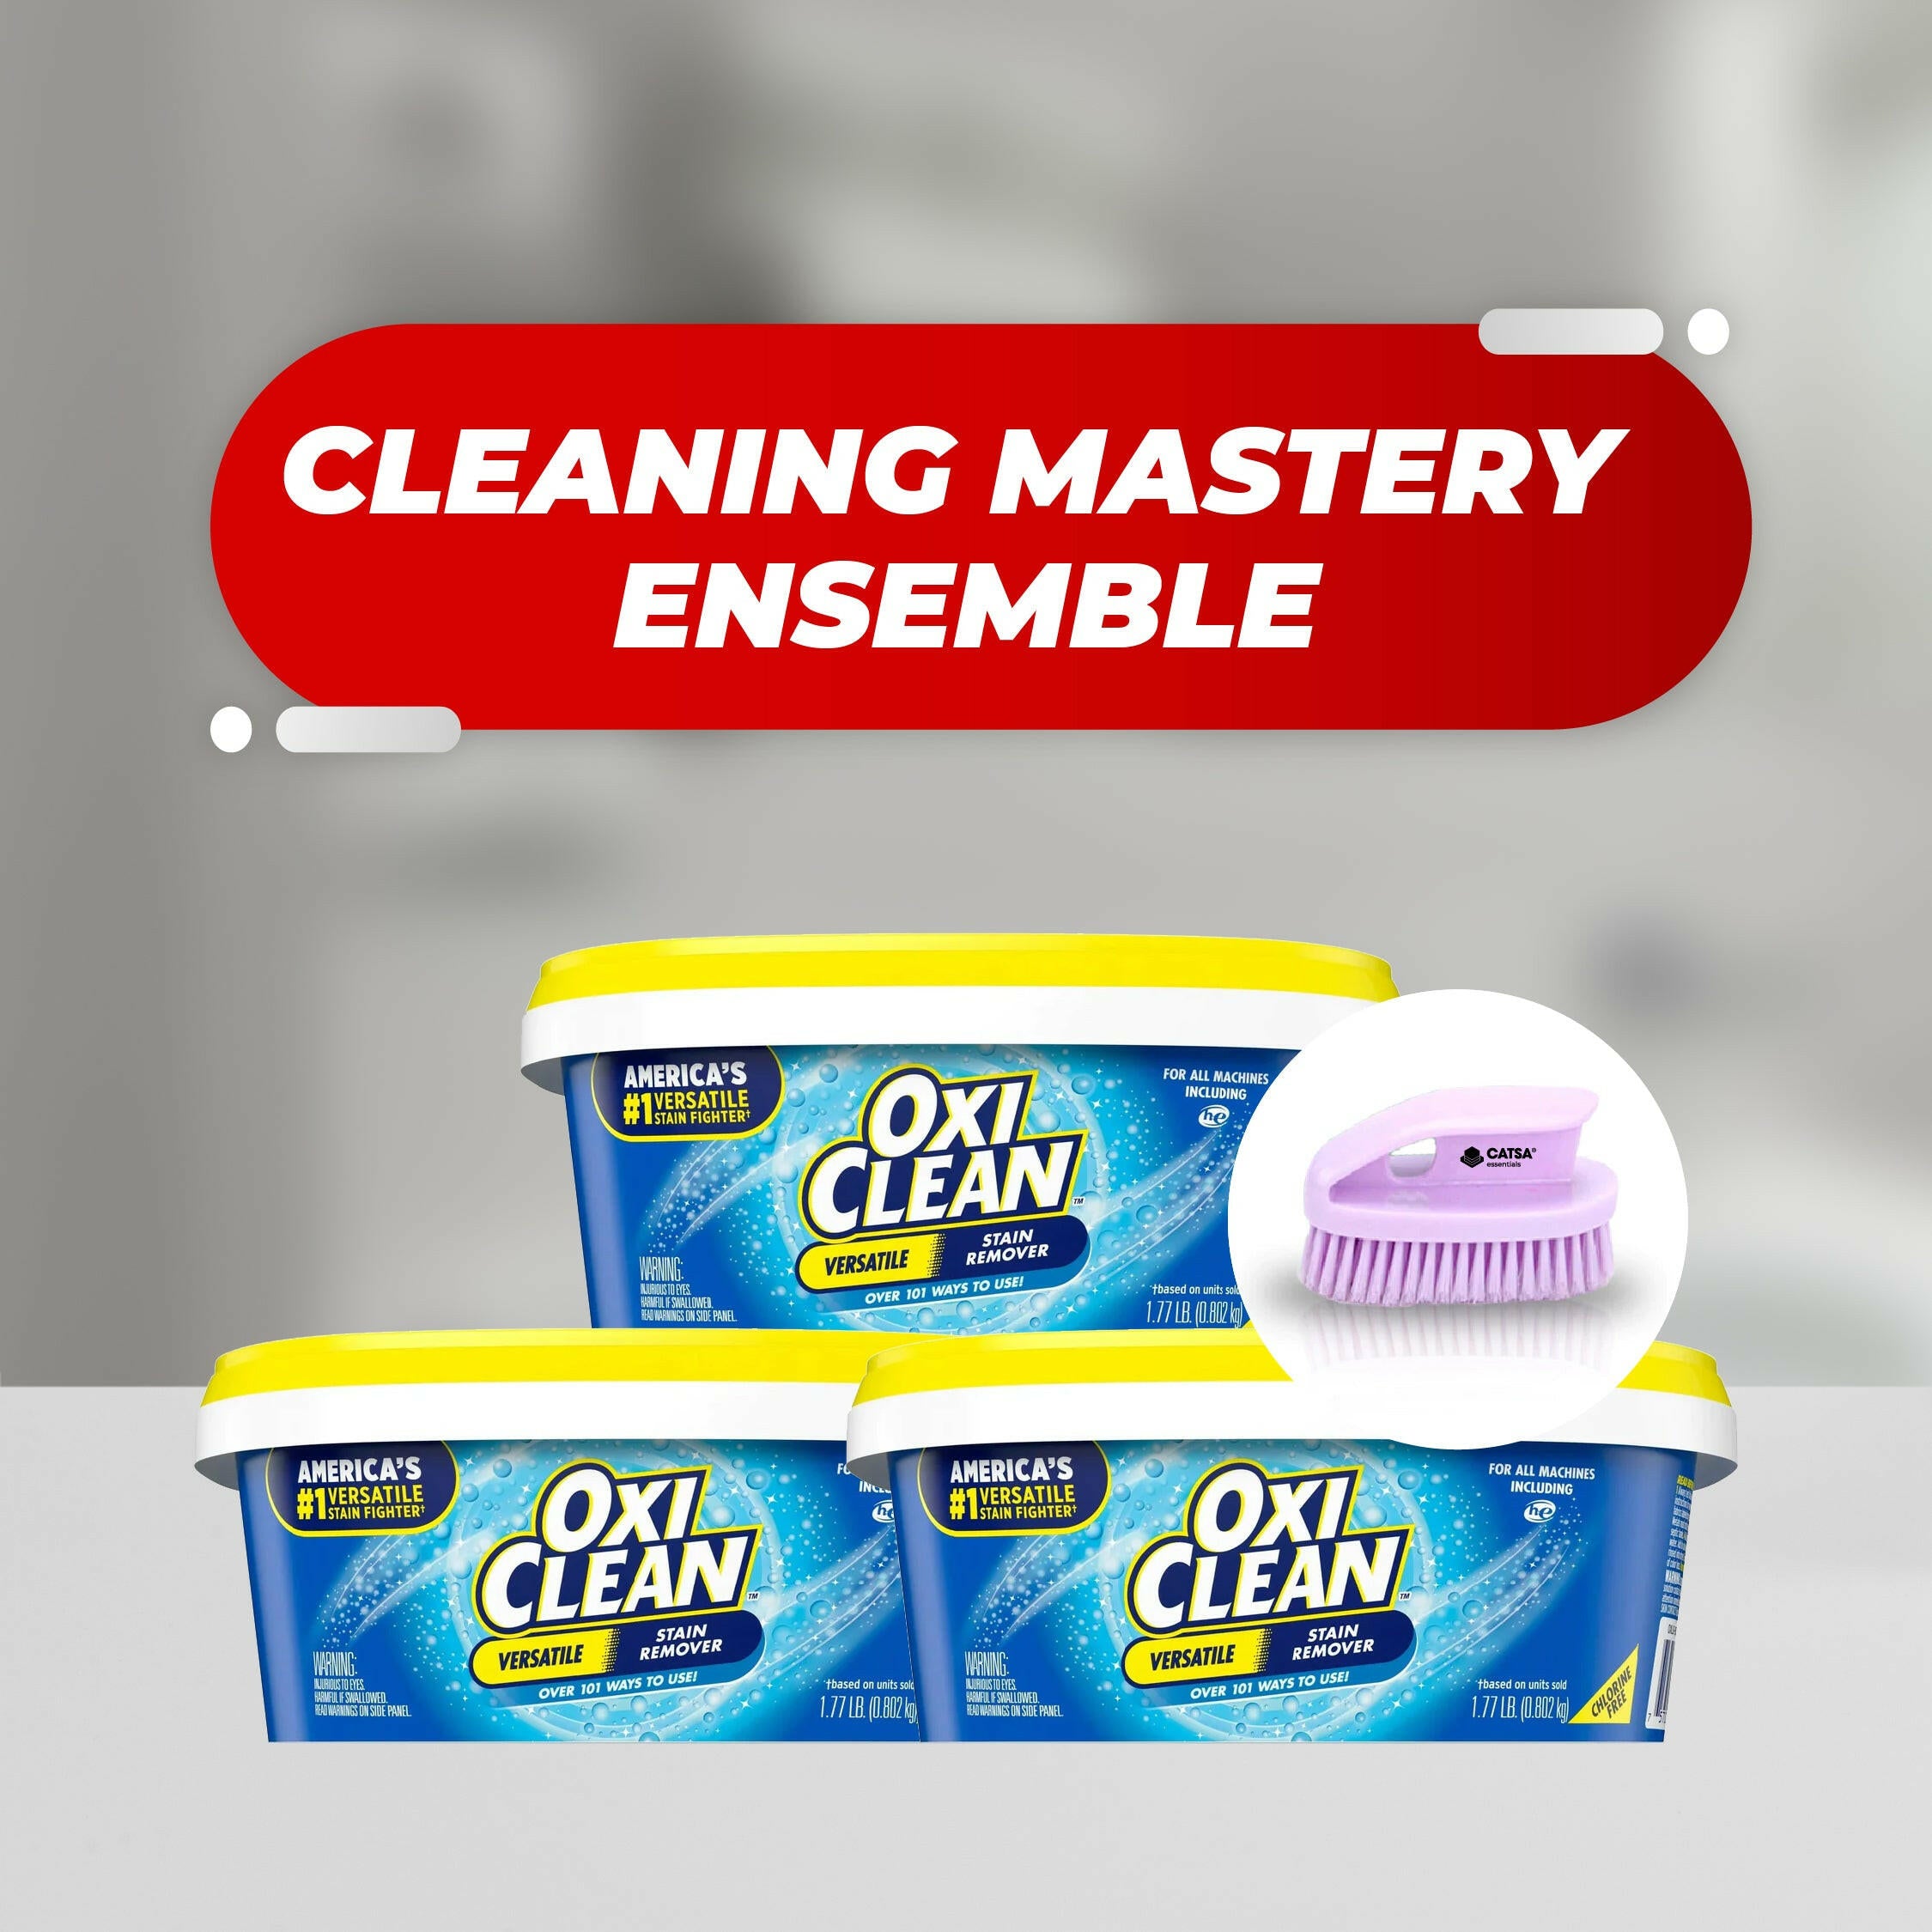 3 Versatile Stain Remover Powder, 1.77 lb + Catsa Essentials Brush Cleaning Tool